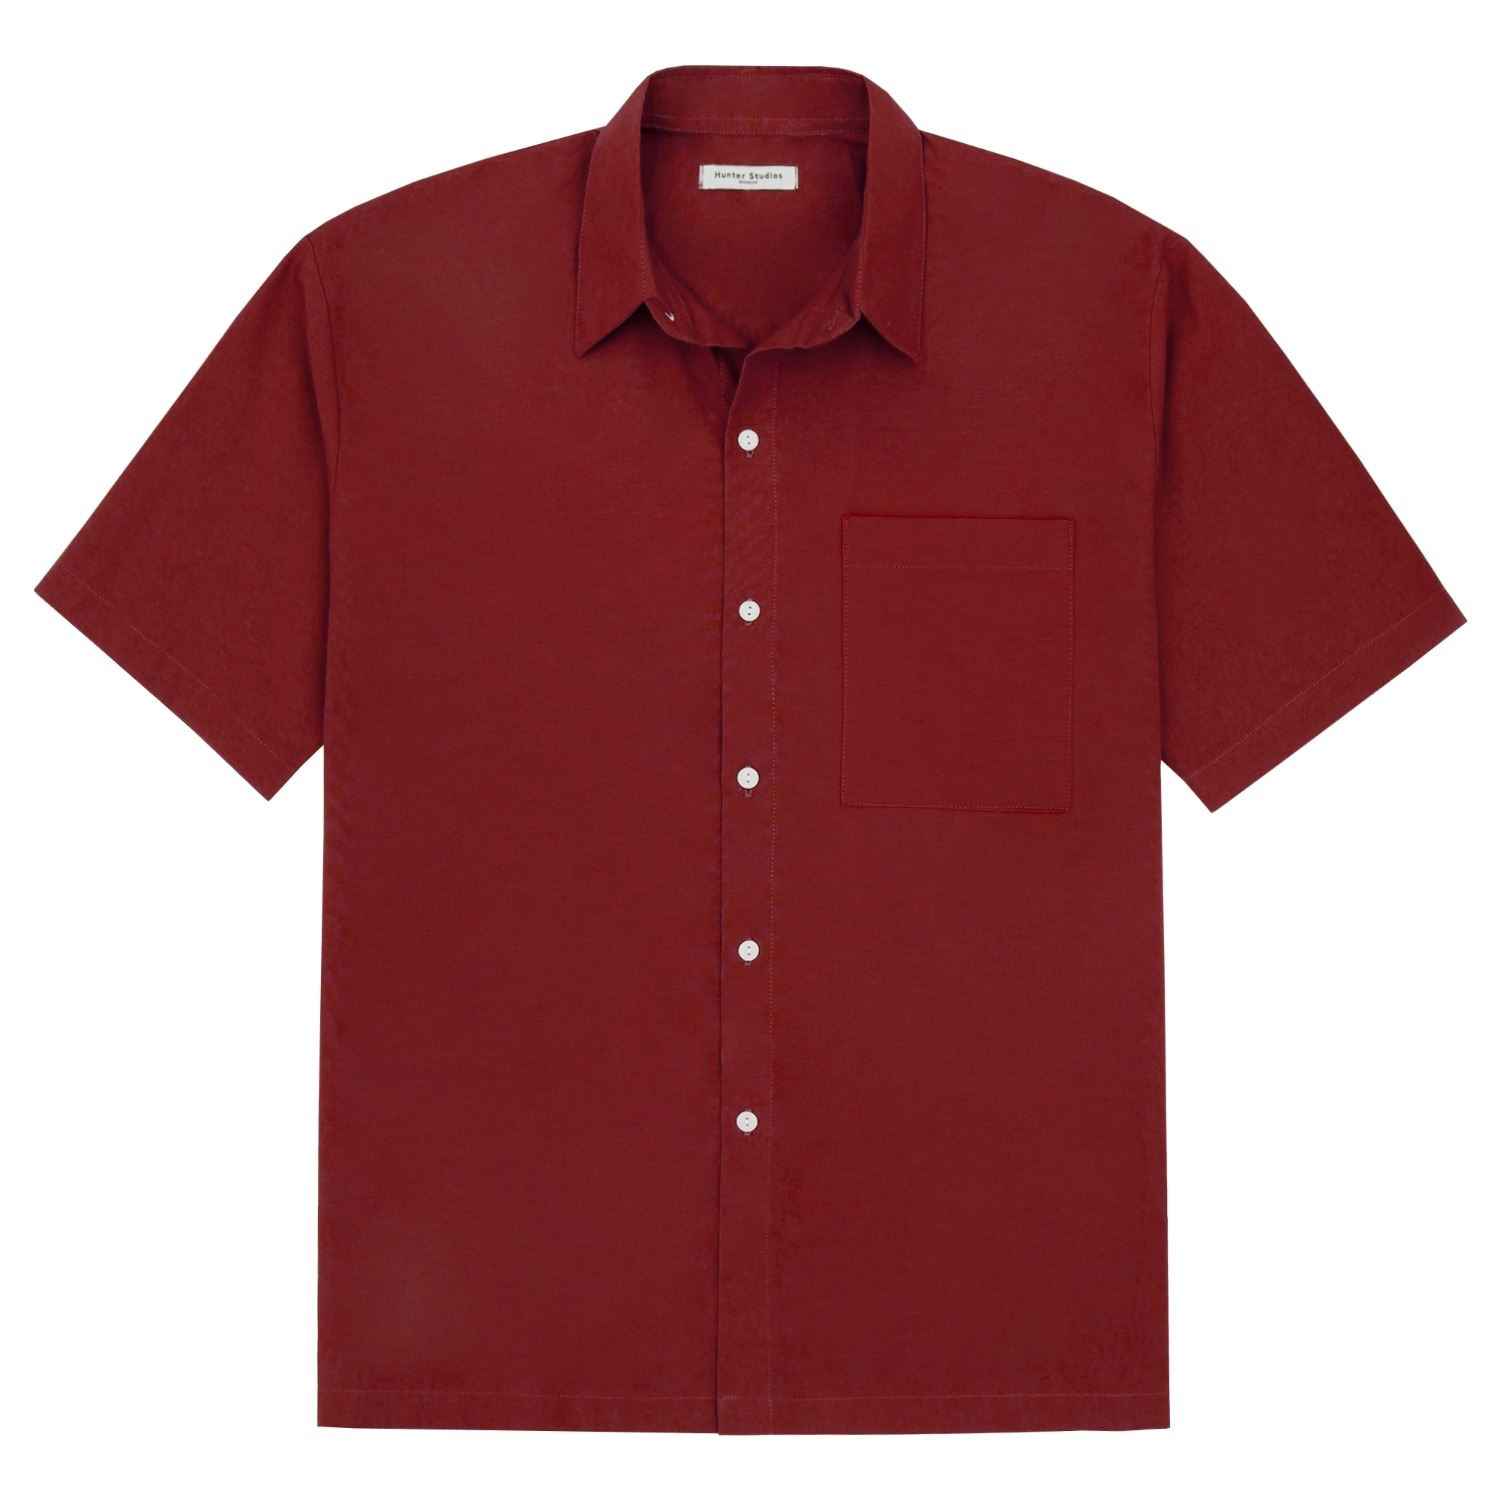 Fainly Shirt (Red)